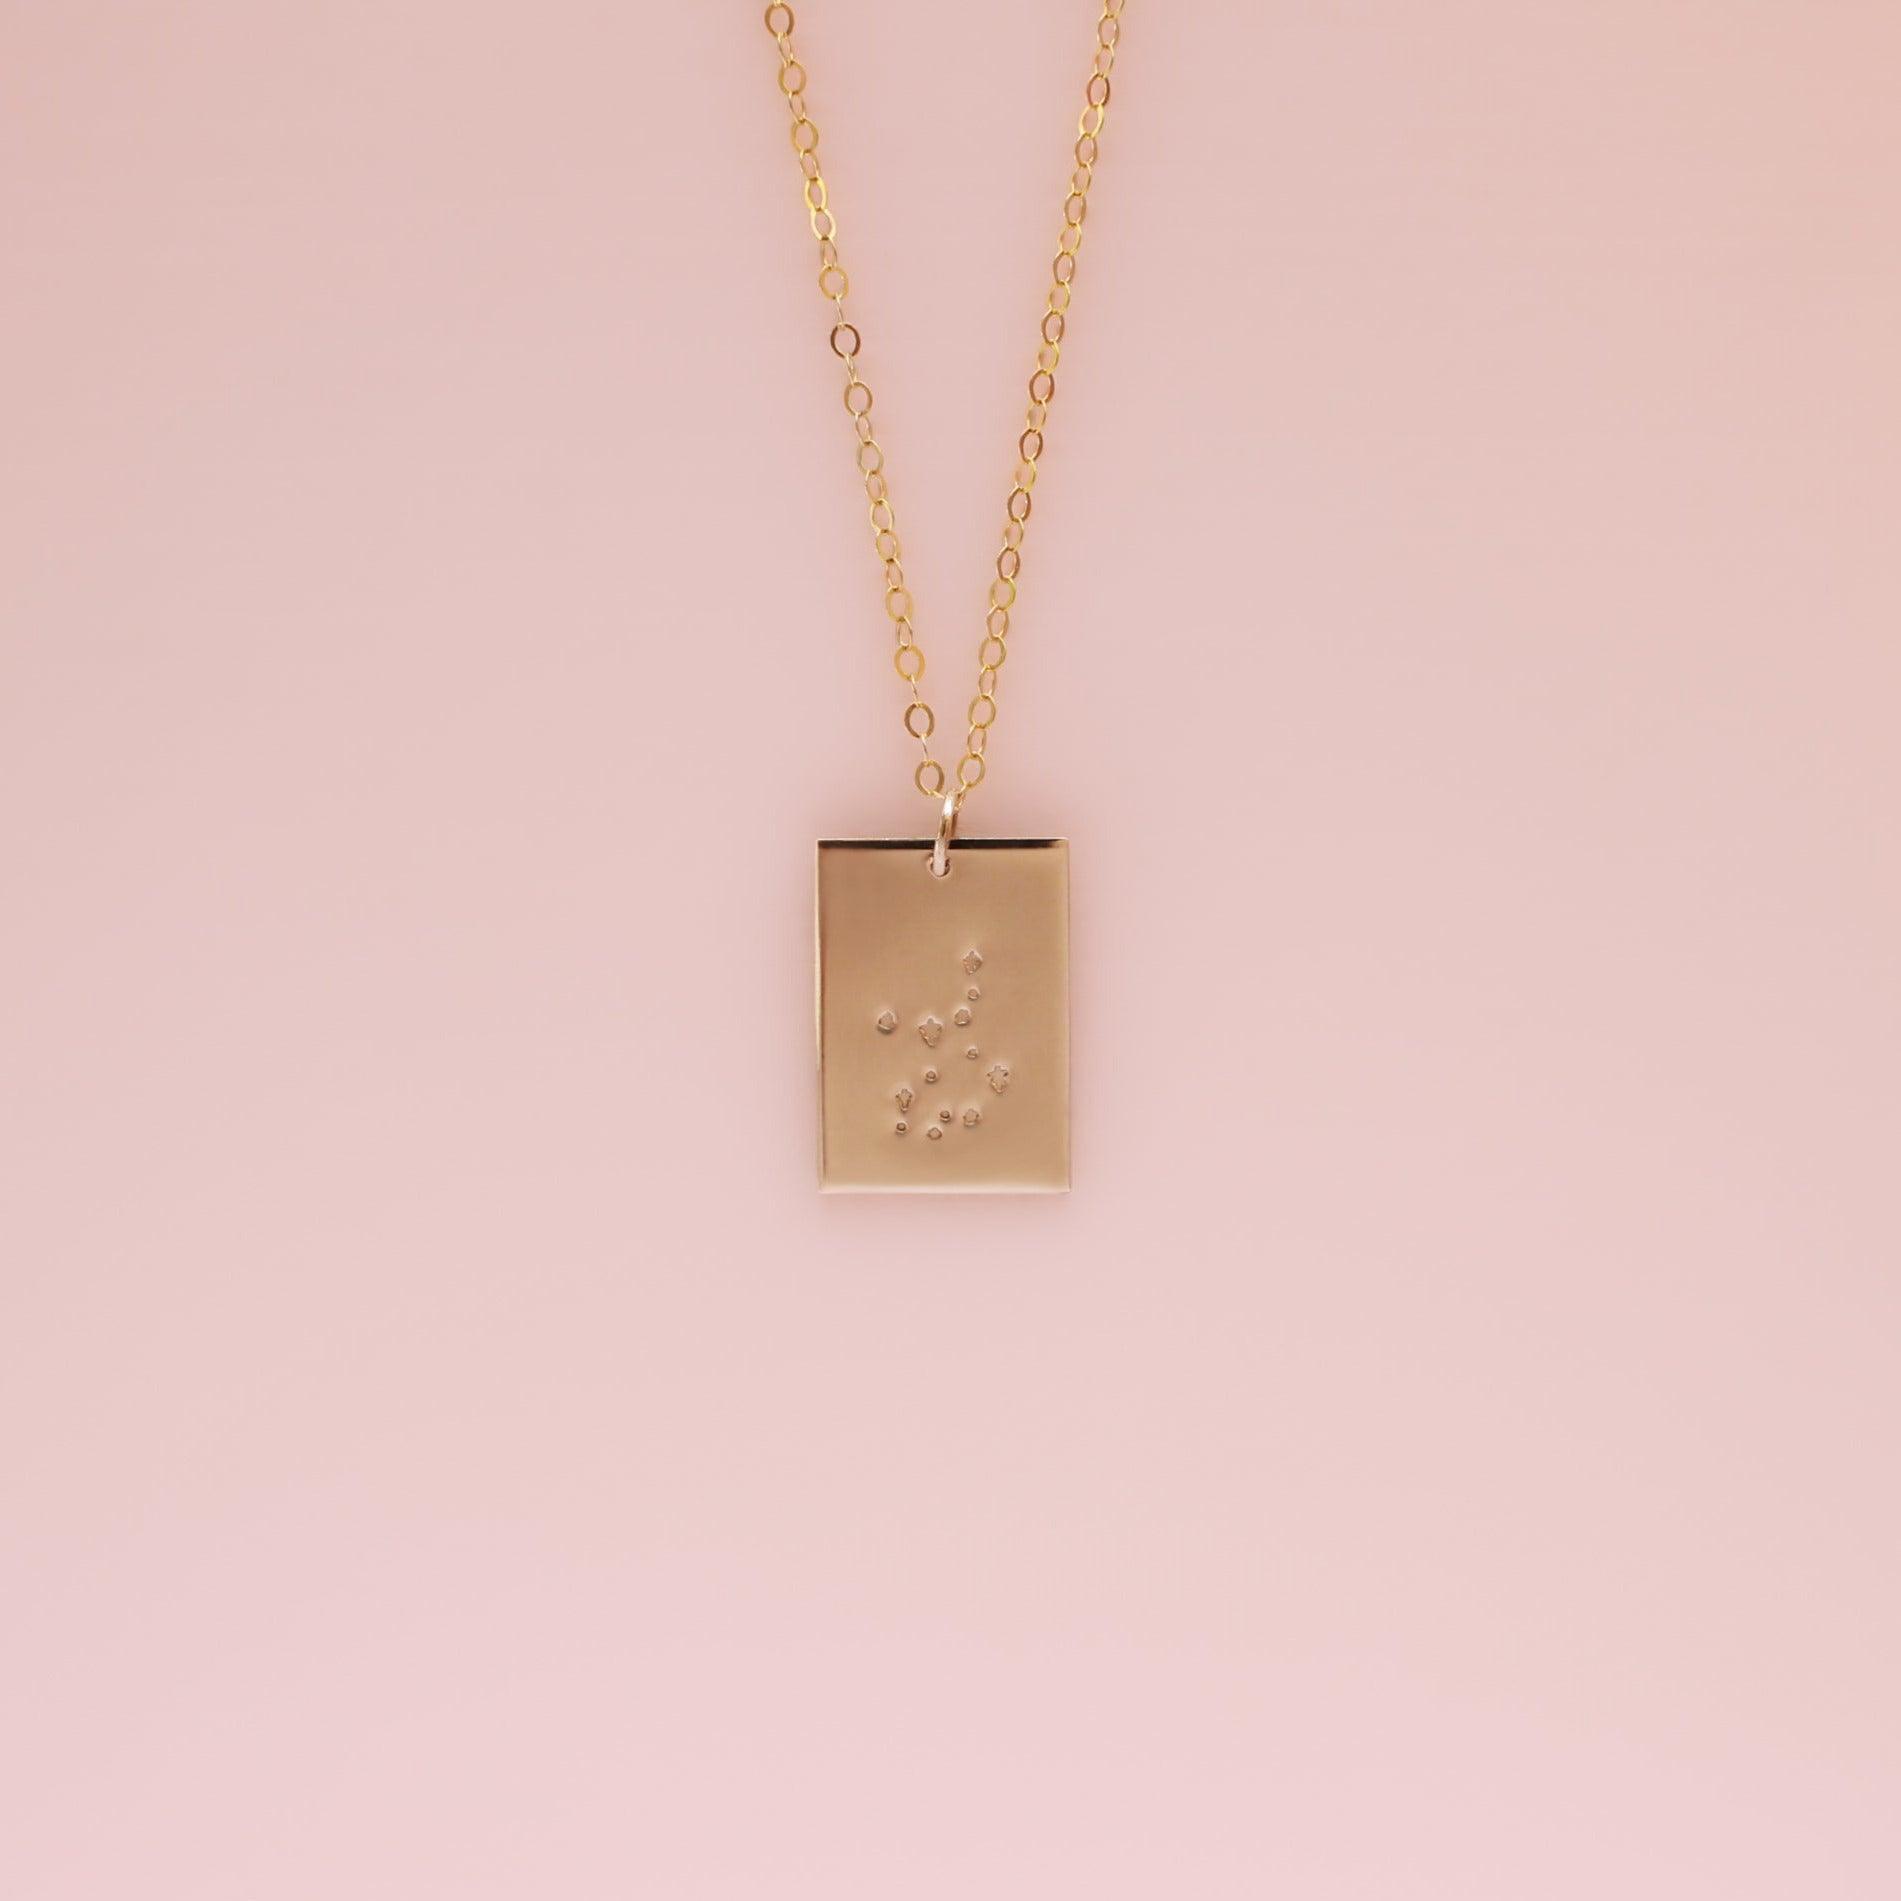 Amelia Zodiac Constellation Necklace - Nolia Jewelry - Meaningful + Sustainably Handcrafted Jewelry